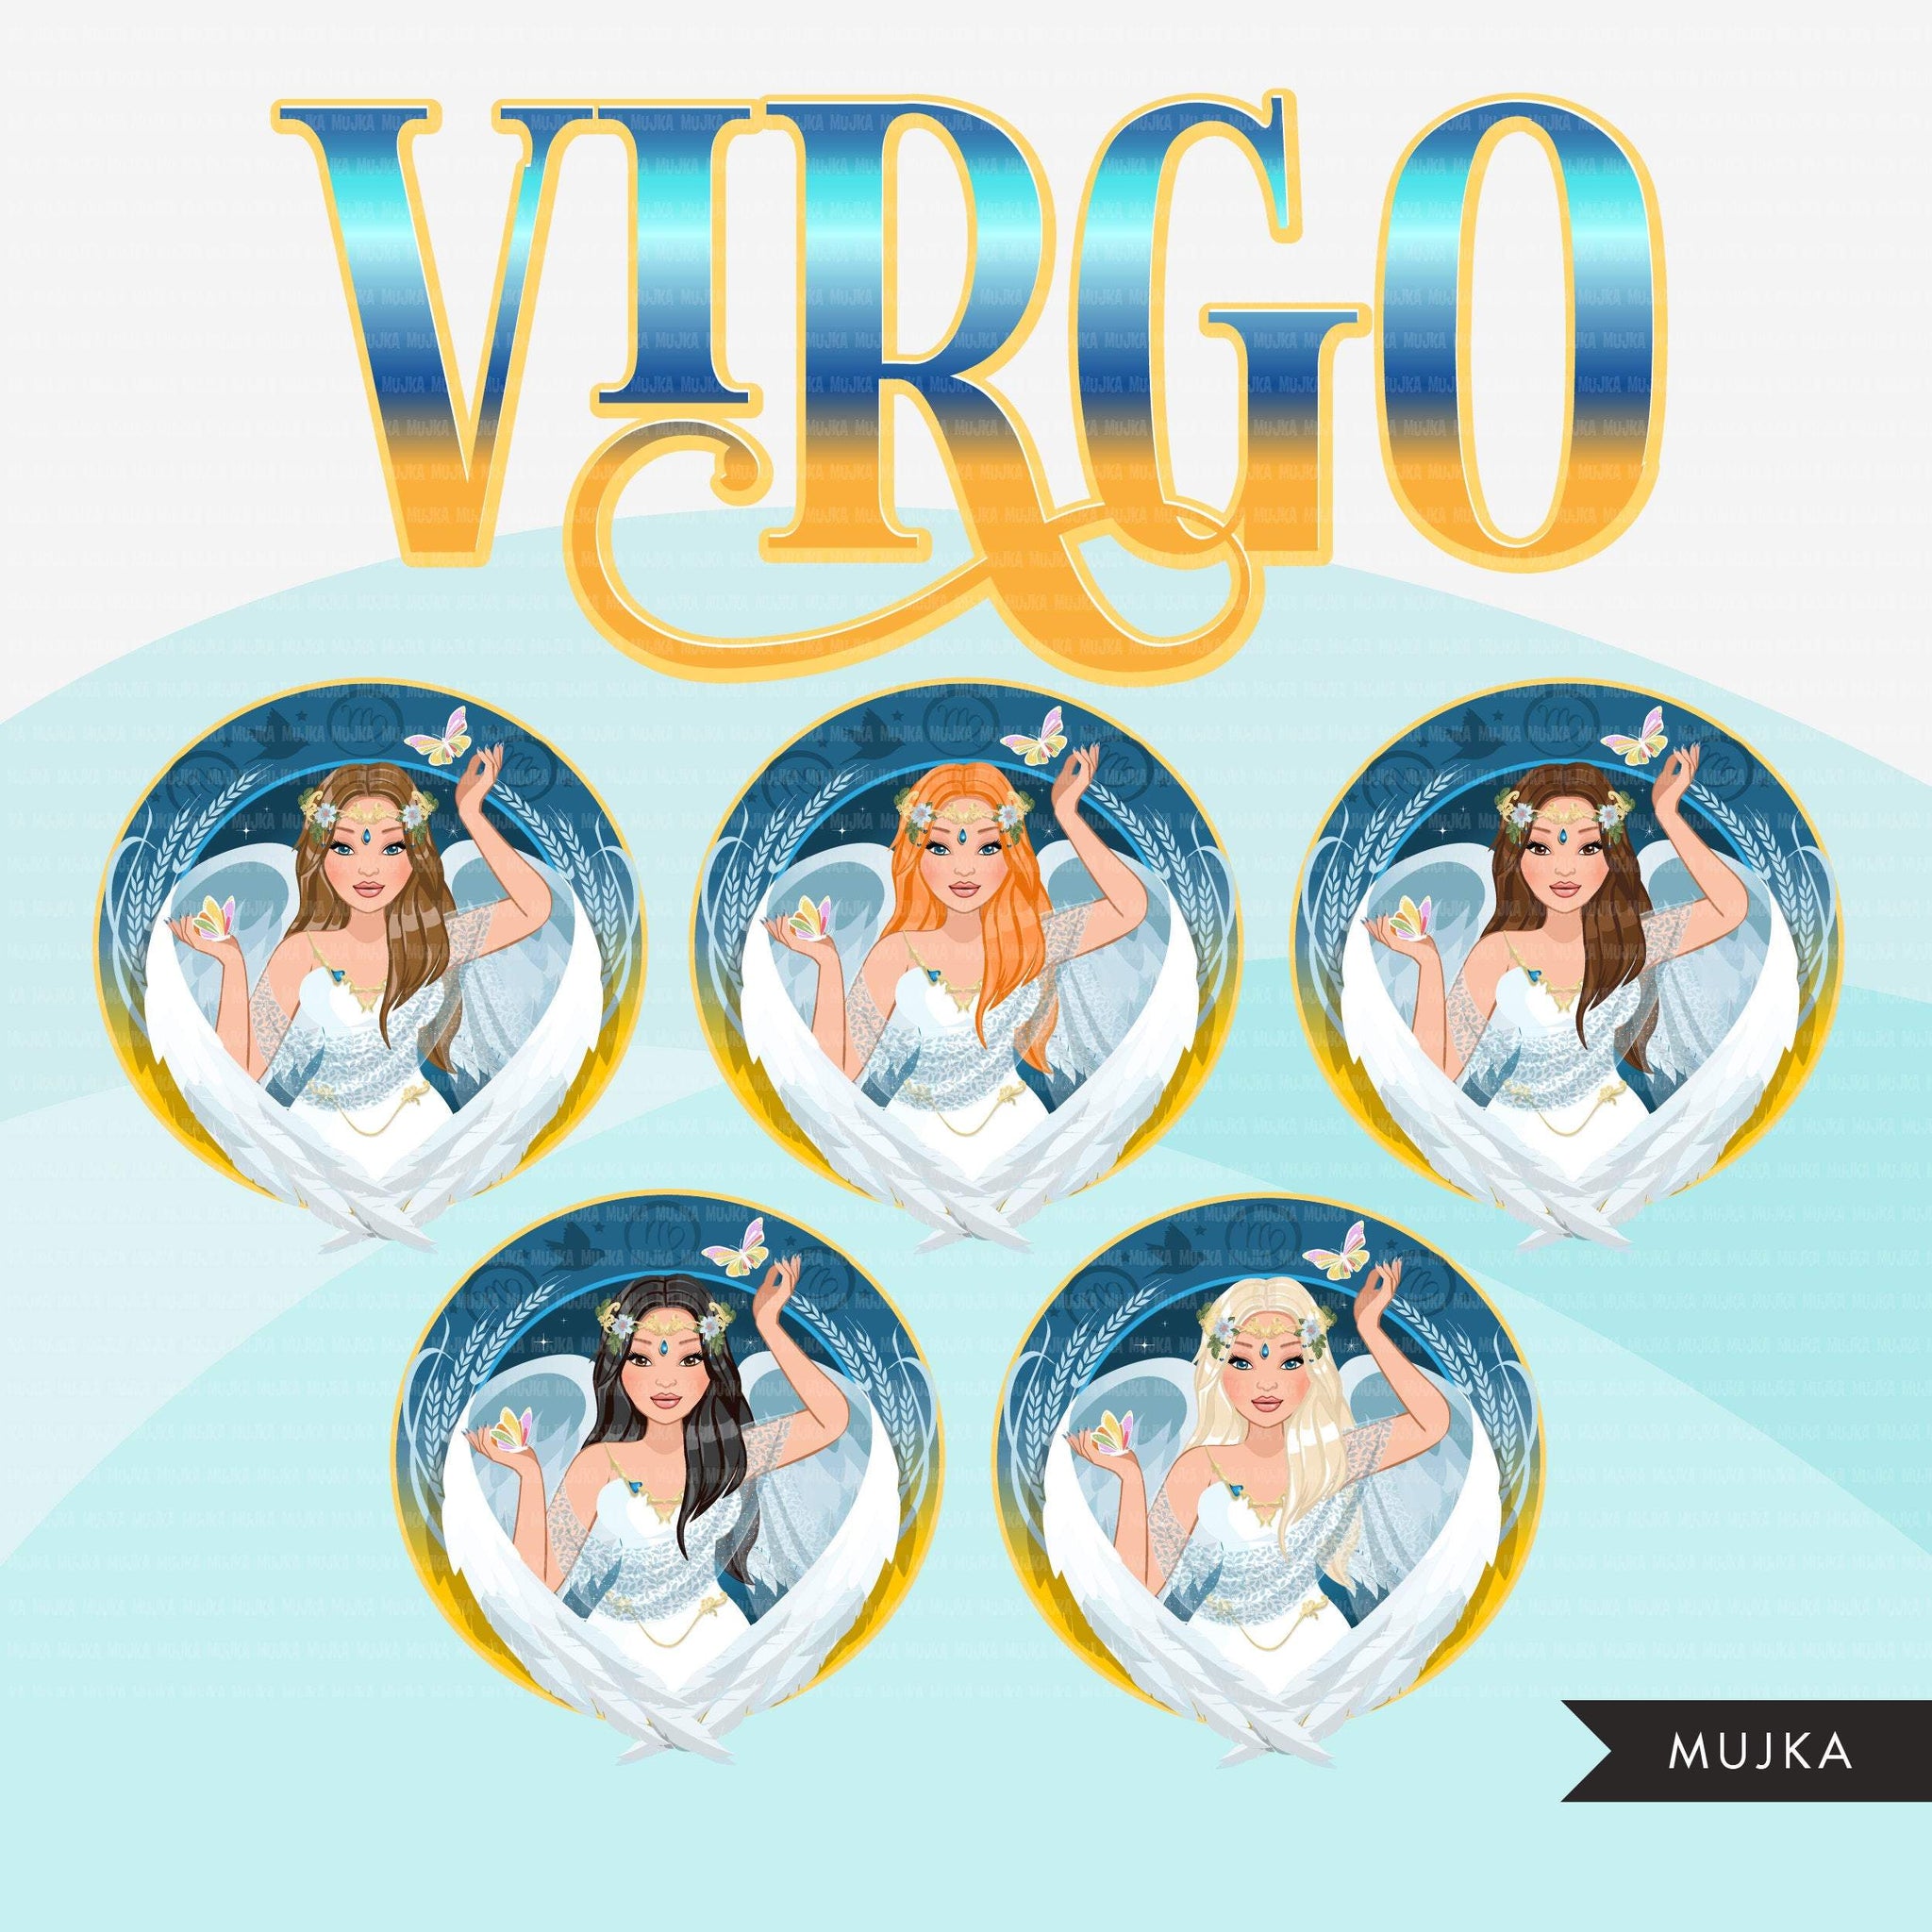 Zodiac Virgo Clipart, Png digital download, Sublimation Graphics for Cricut & Cameo, Caucasian long hair Woman Horoscope sign designs